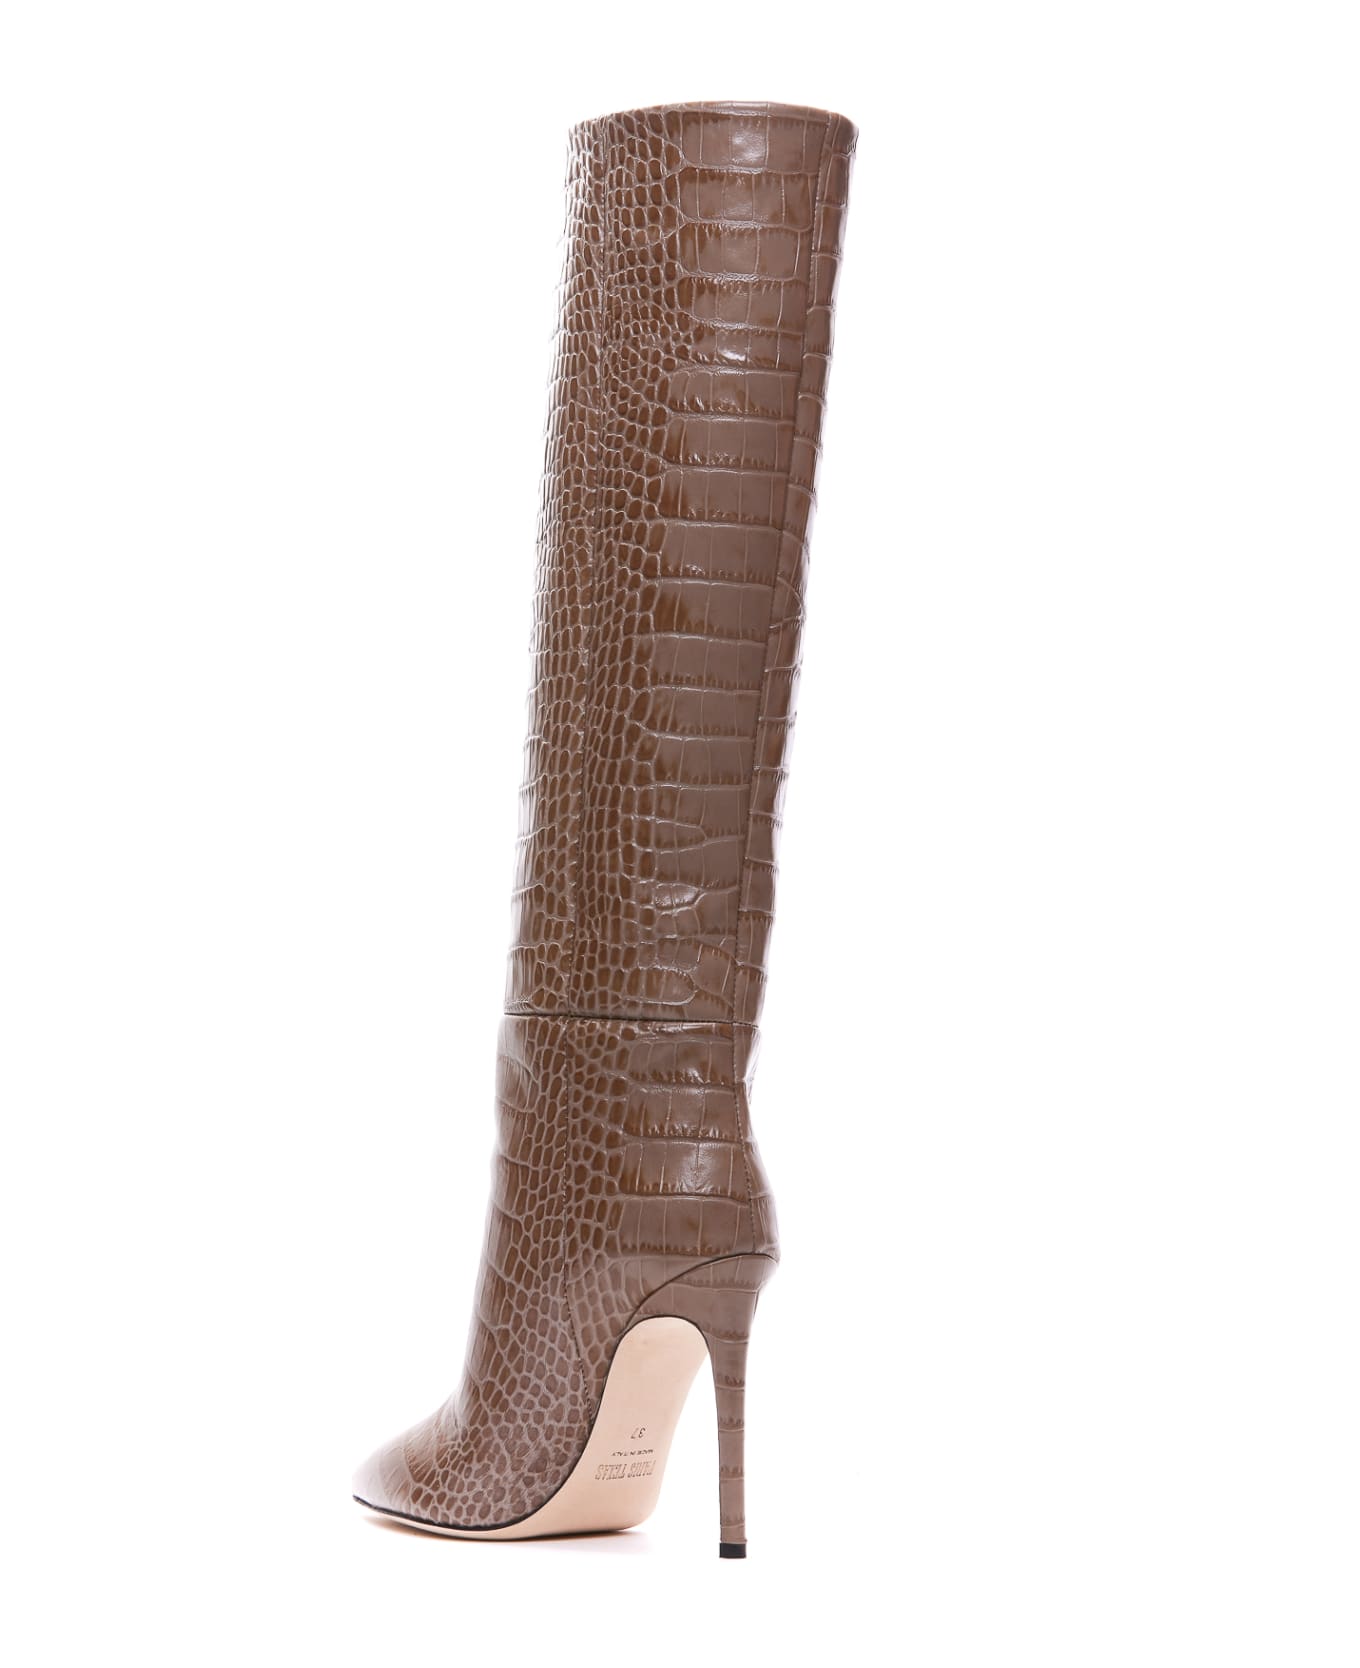 Paris Texas Stiletto Pump Boots - Beige